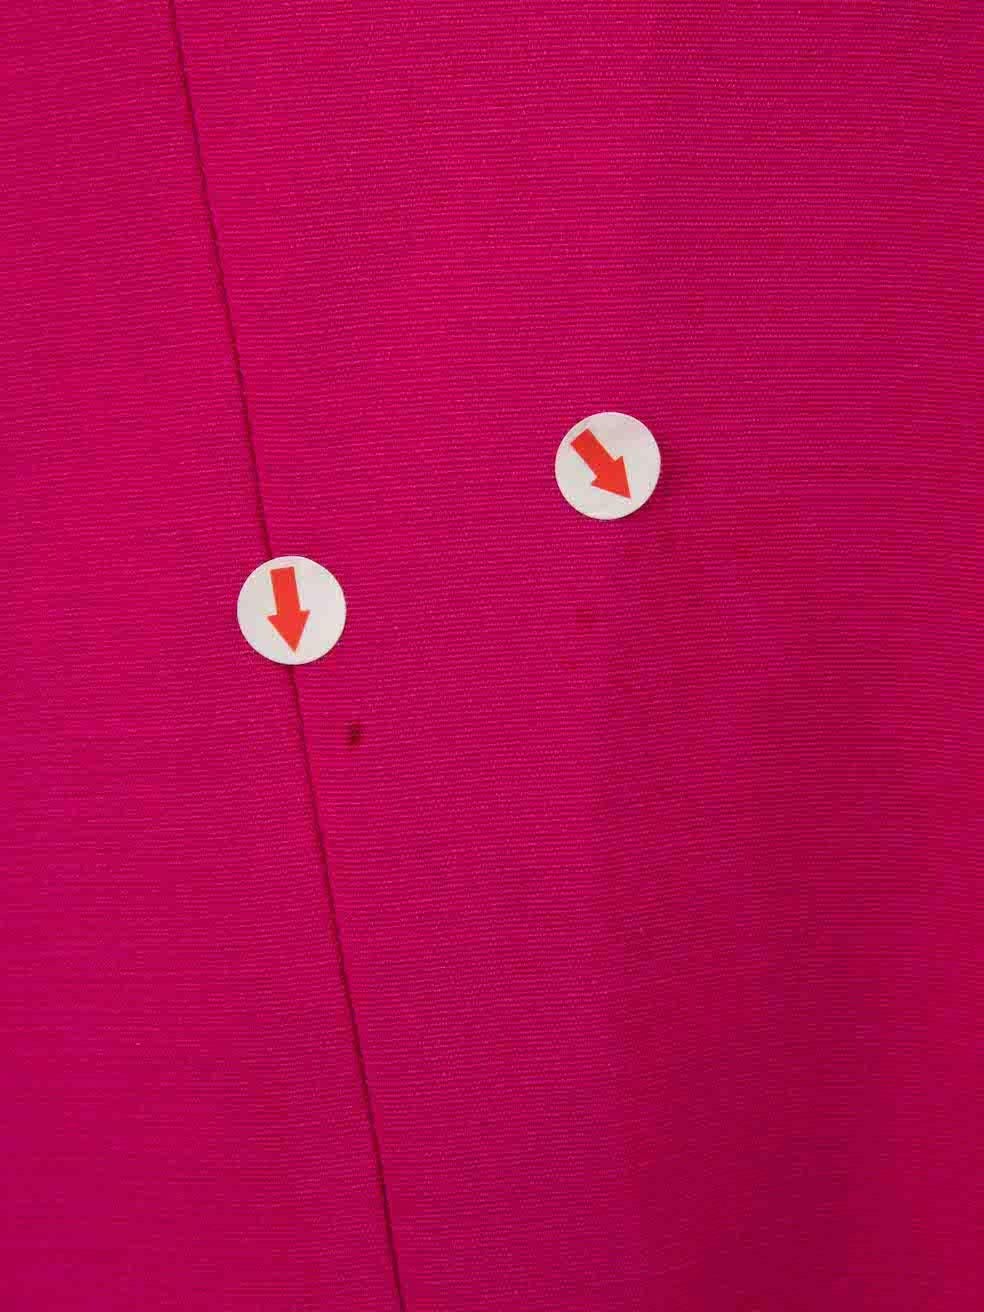 Women's Victoria Beckham Pink Silk One Shoulder Midi Dress Size XS For Sale